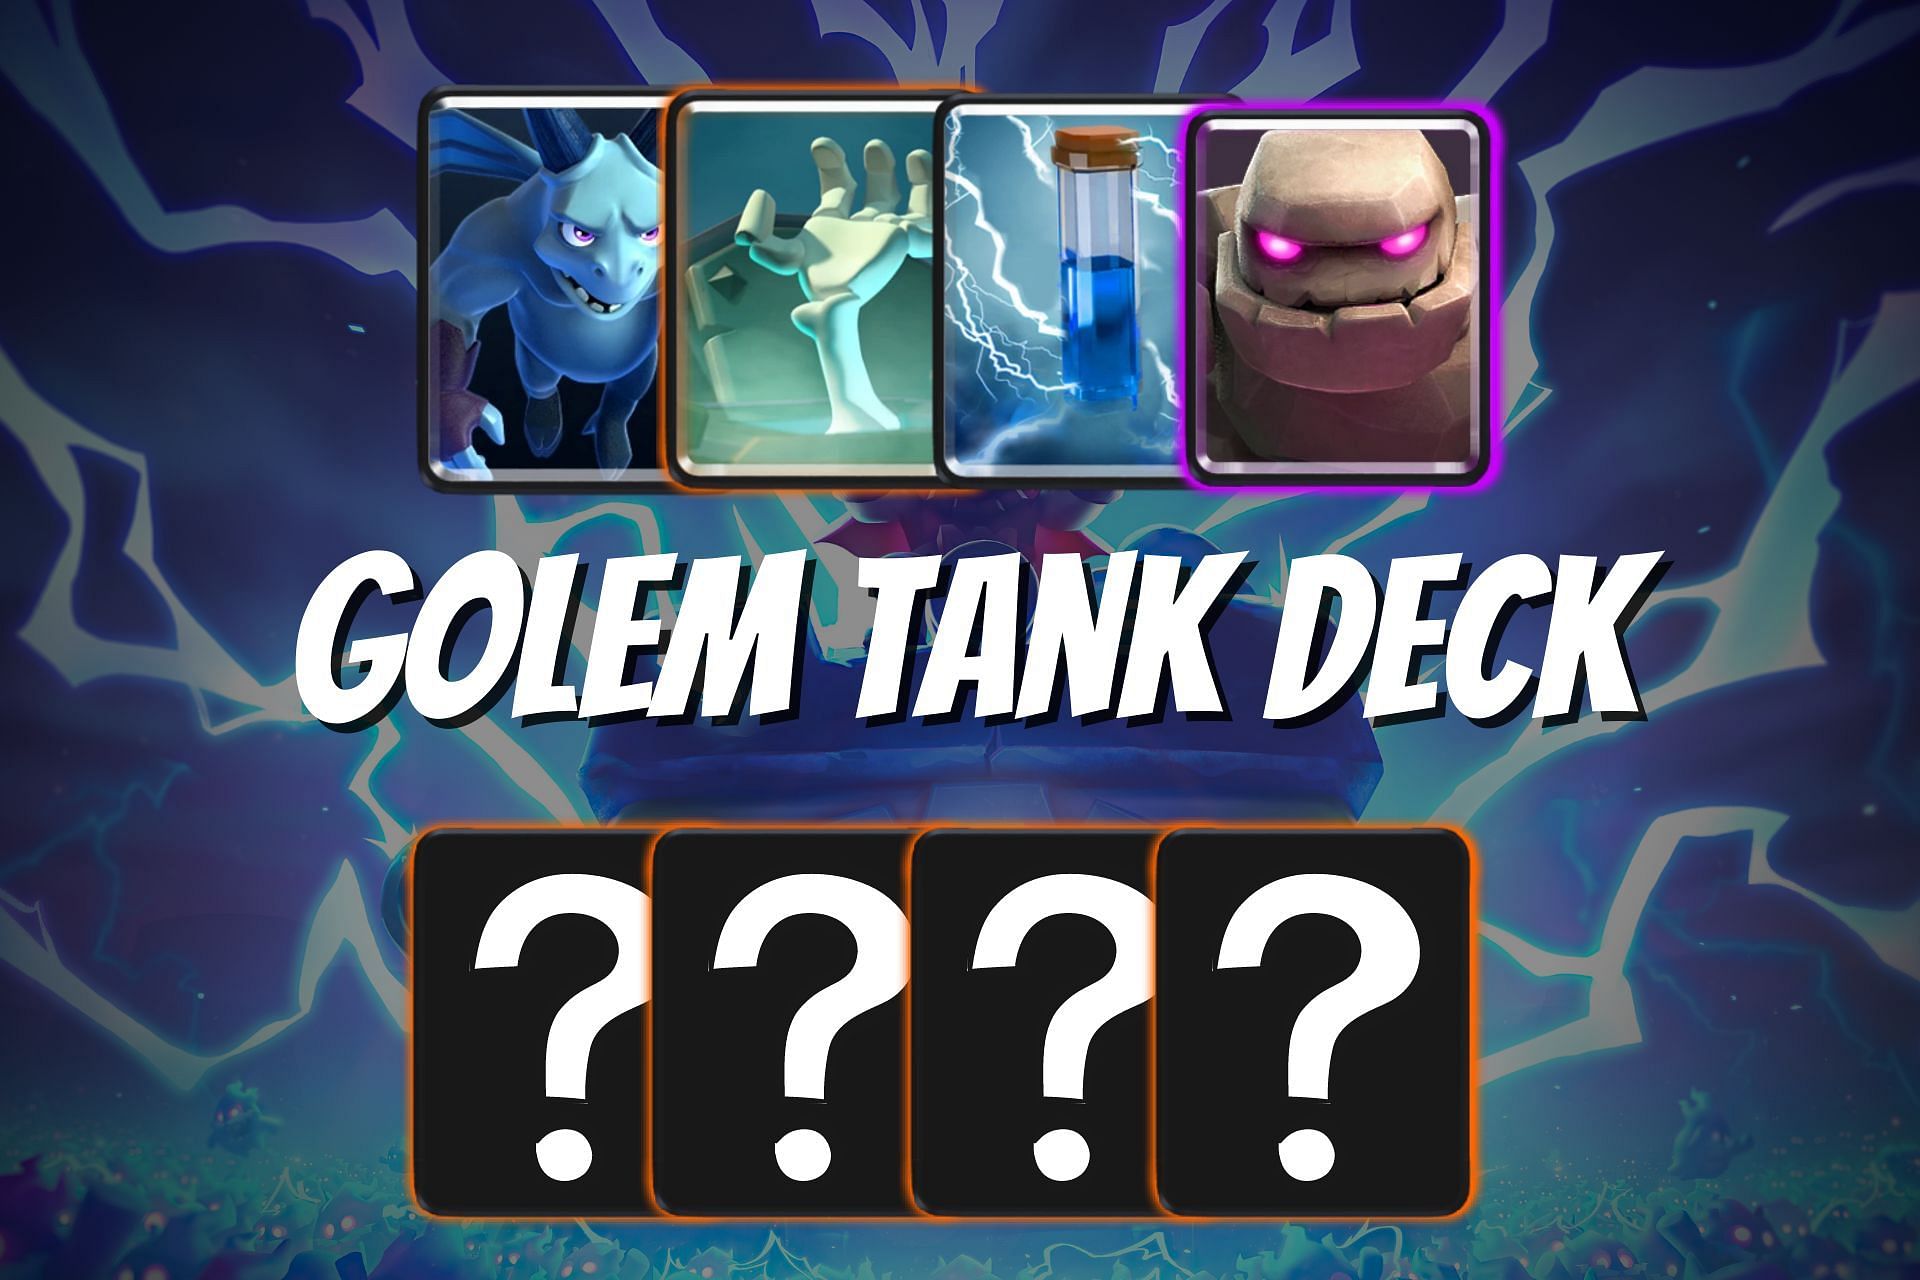 The Golem Tank deck in Clash Royale (Image via Sportskeeda)